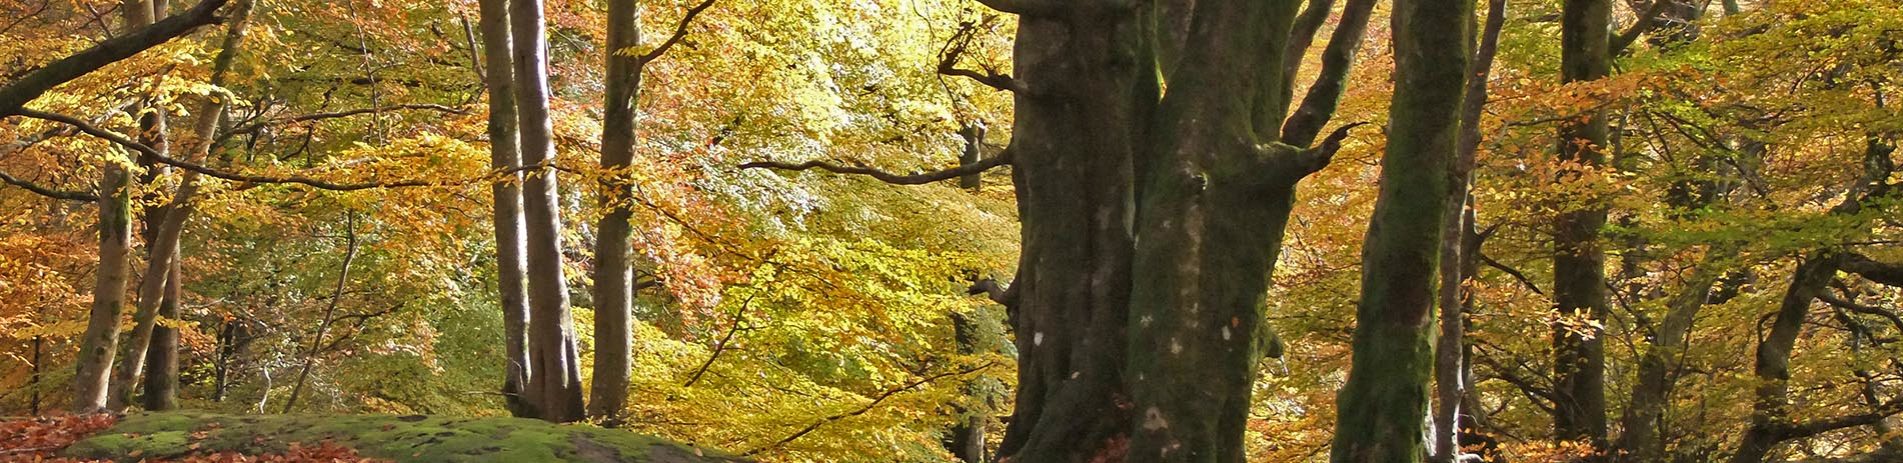 callendar-woods-in-yellow-and-orange-autumn-colours